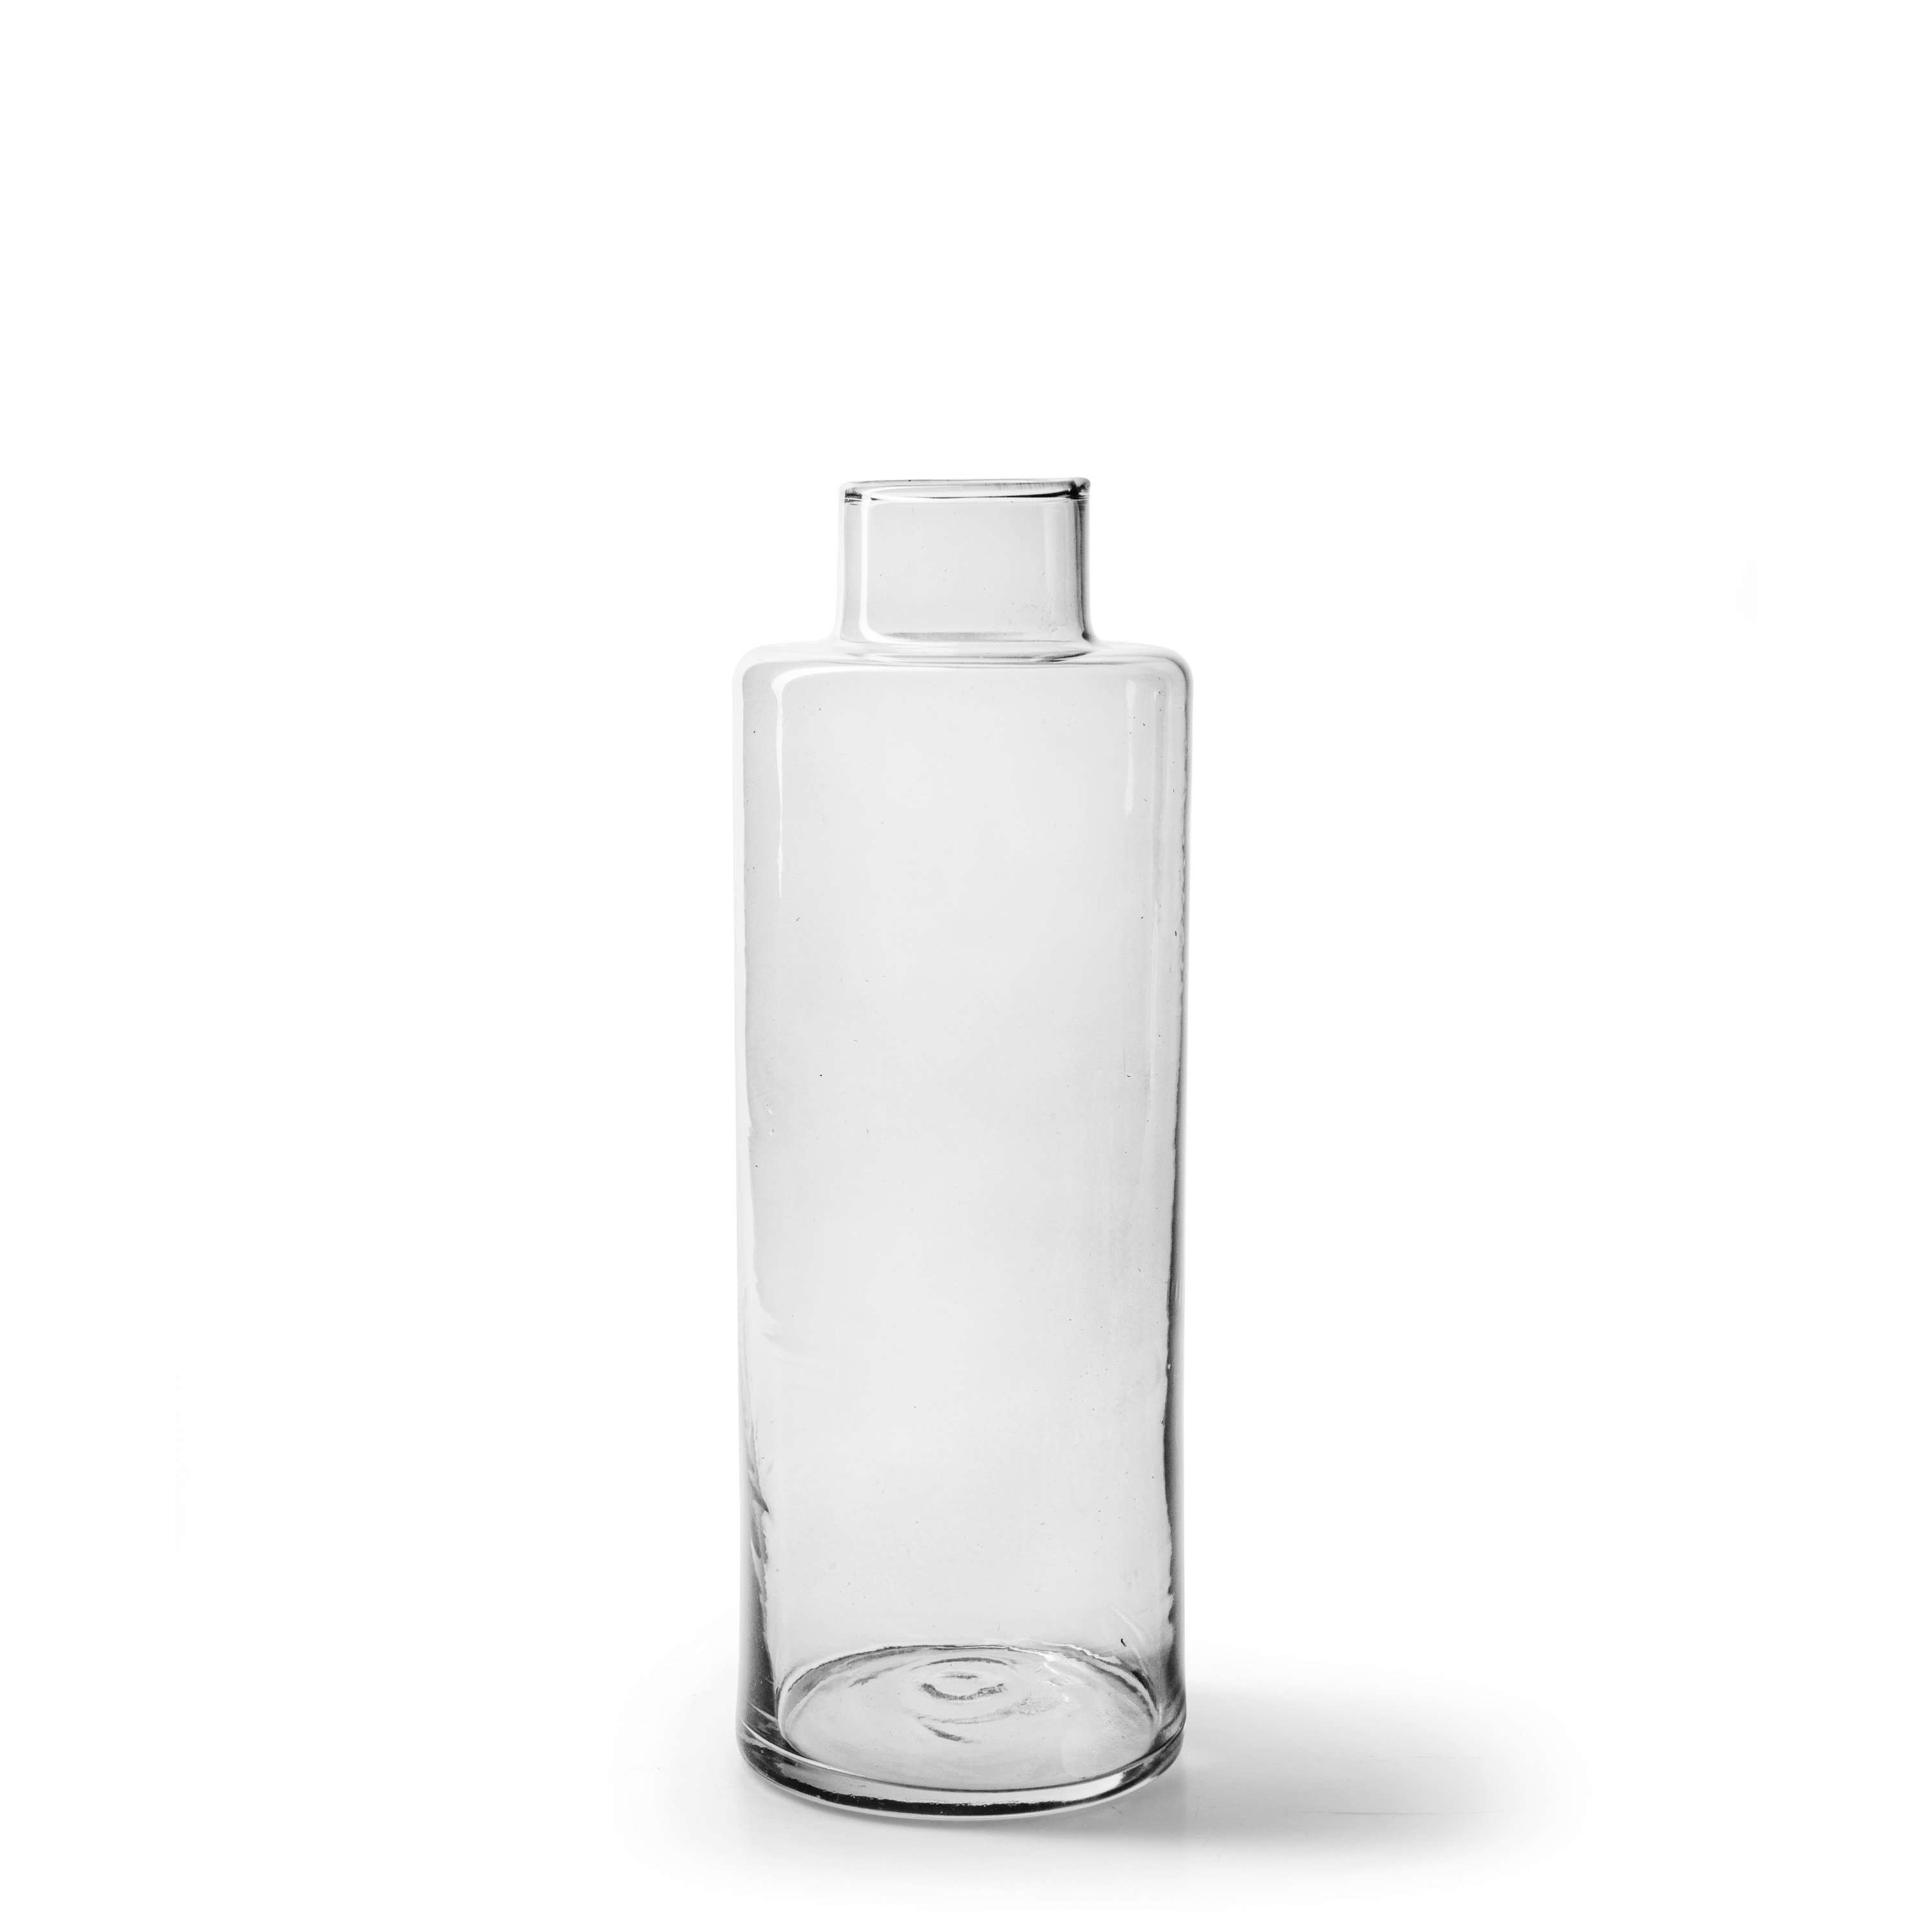 Jodeco Bloemenvaas Willem - helder transparant - glas - D11,5 x H26 cm - fles vorm vaas -